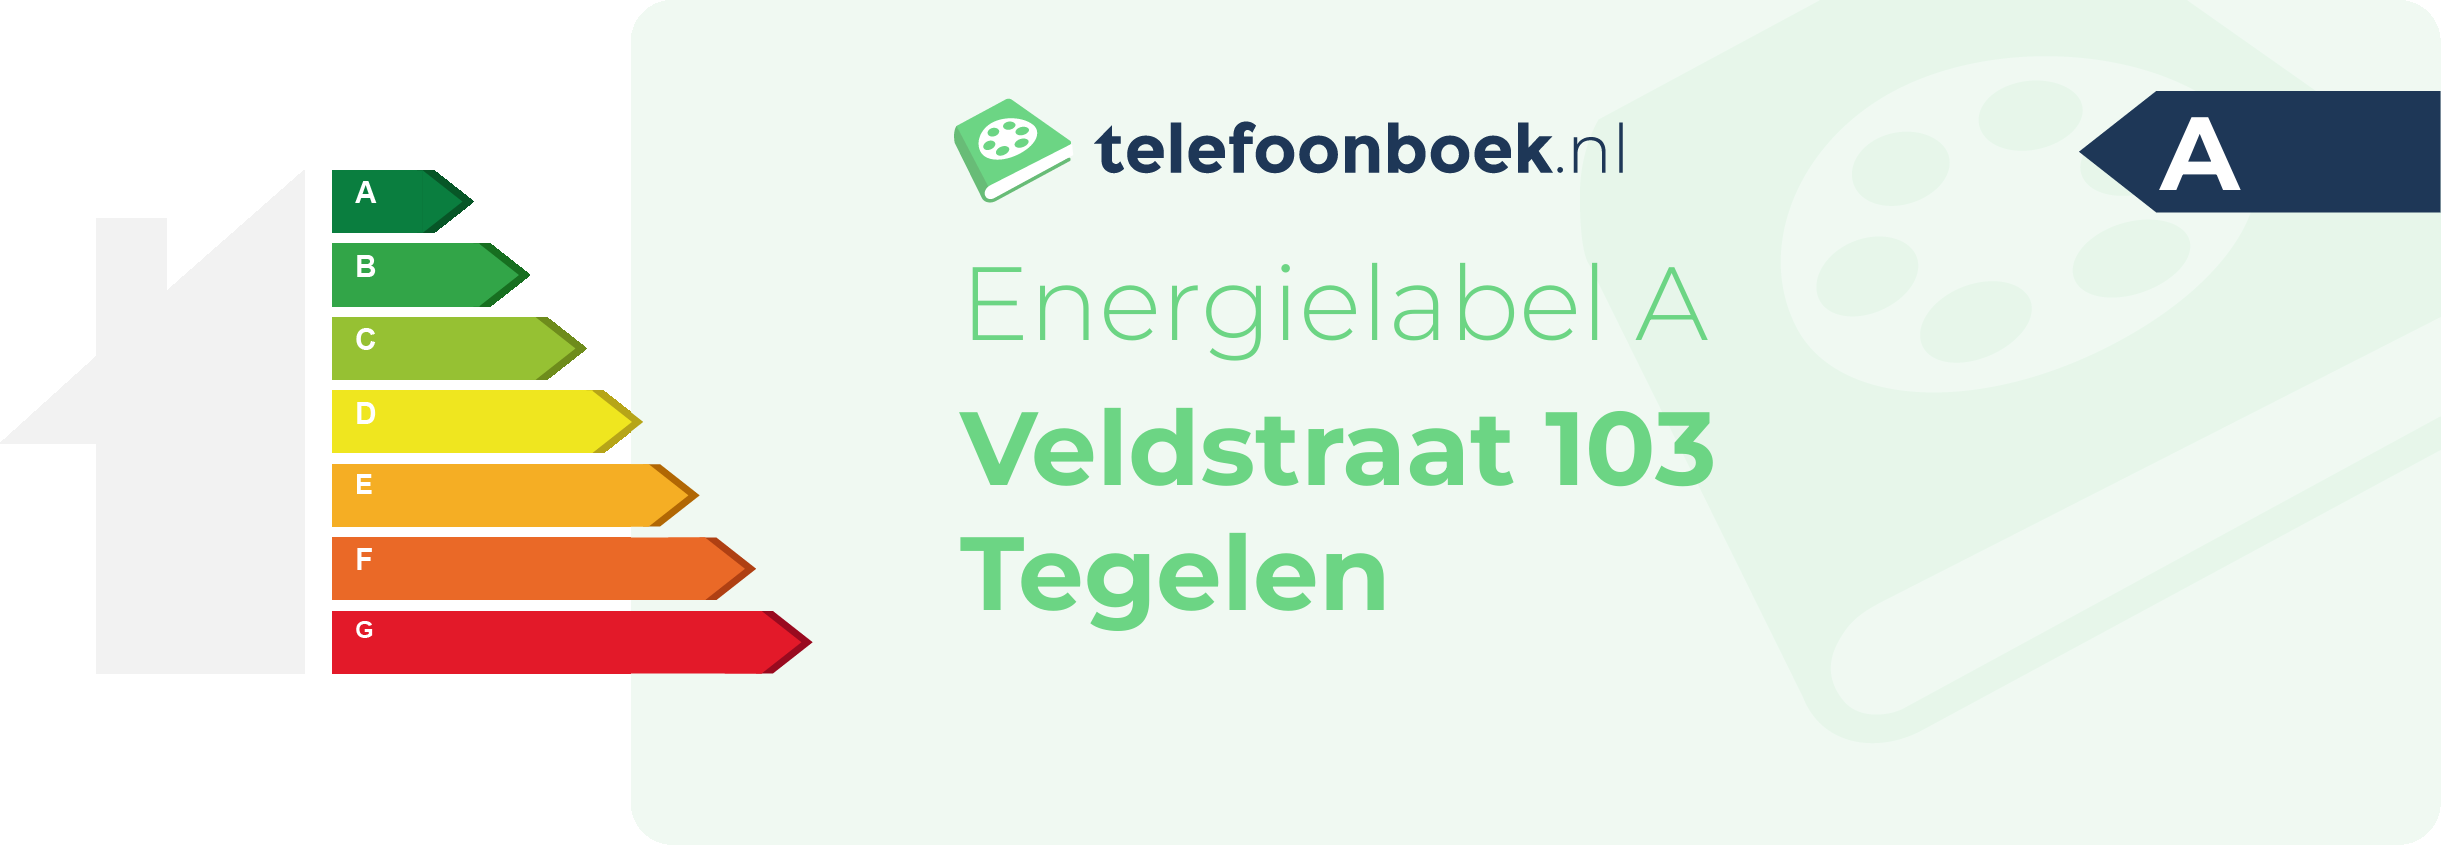 Energielabel Veldstraat 103 Tegelen